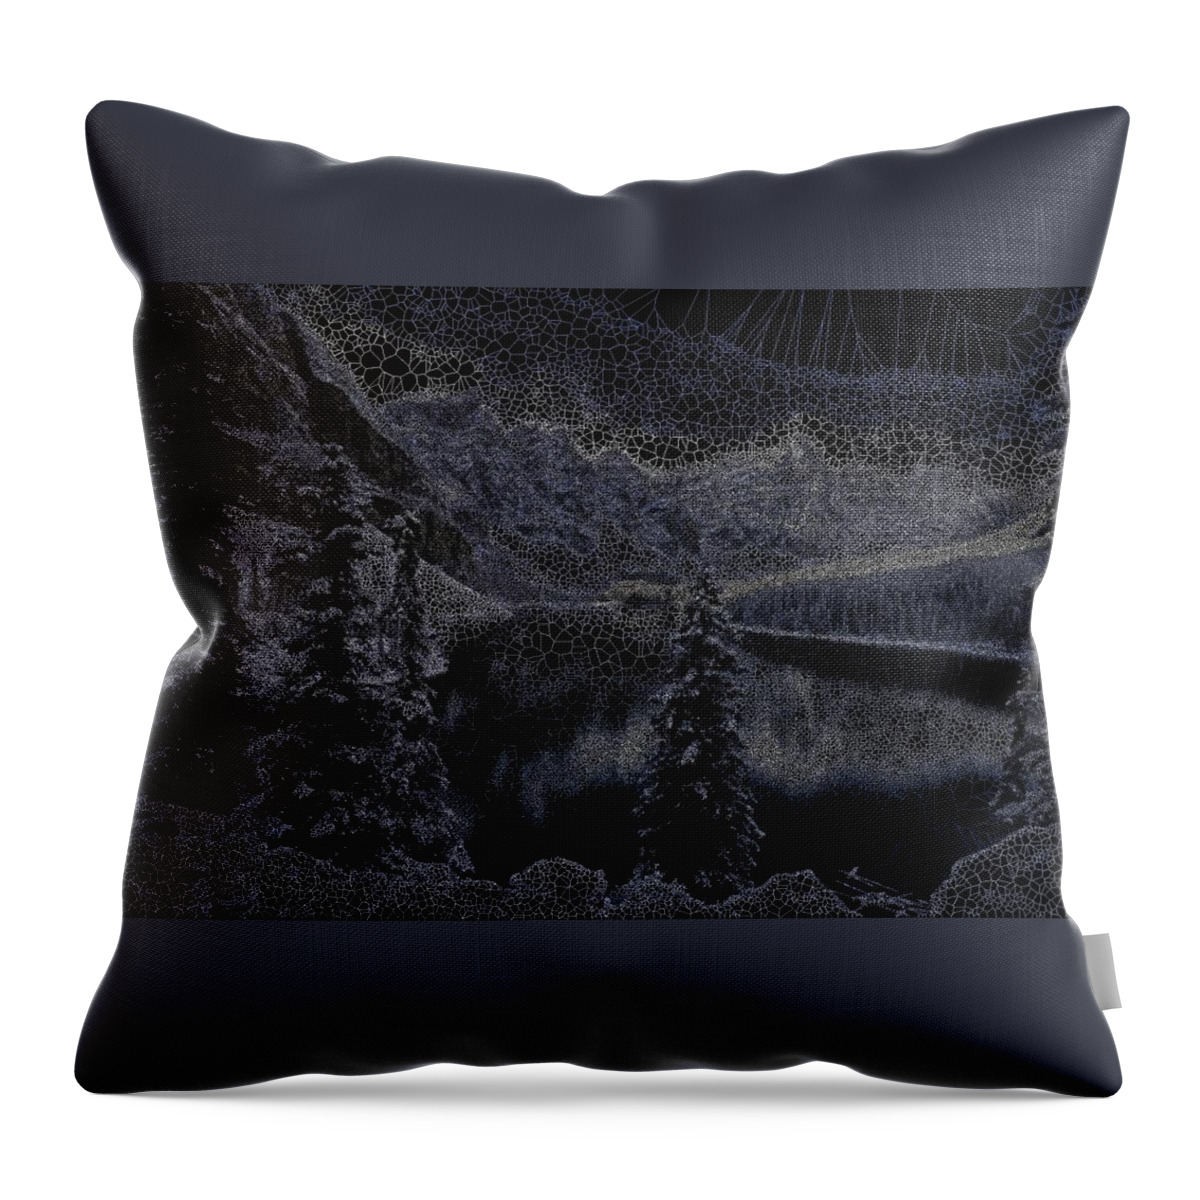 Vorotrans Throw Pillow featuring the digital art Ocean Forest by Stephane Poirier